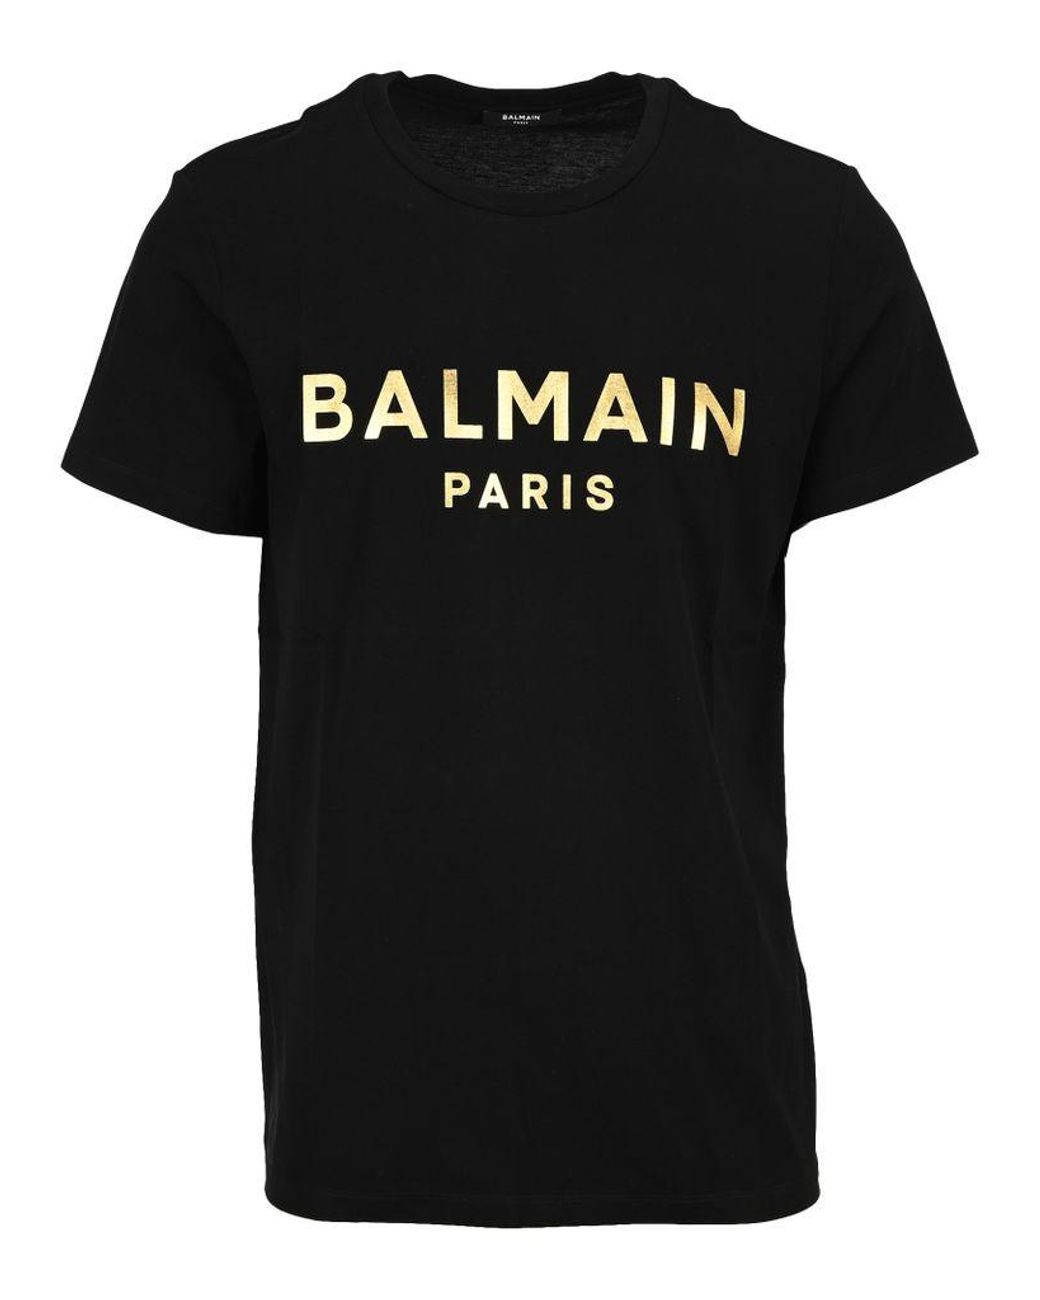 Balmain Metallic Gold Logo T-shirt in Black for Men - Lyst